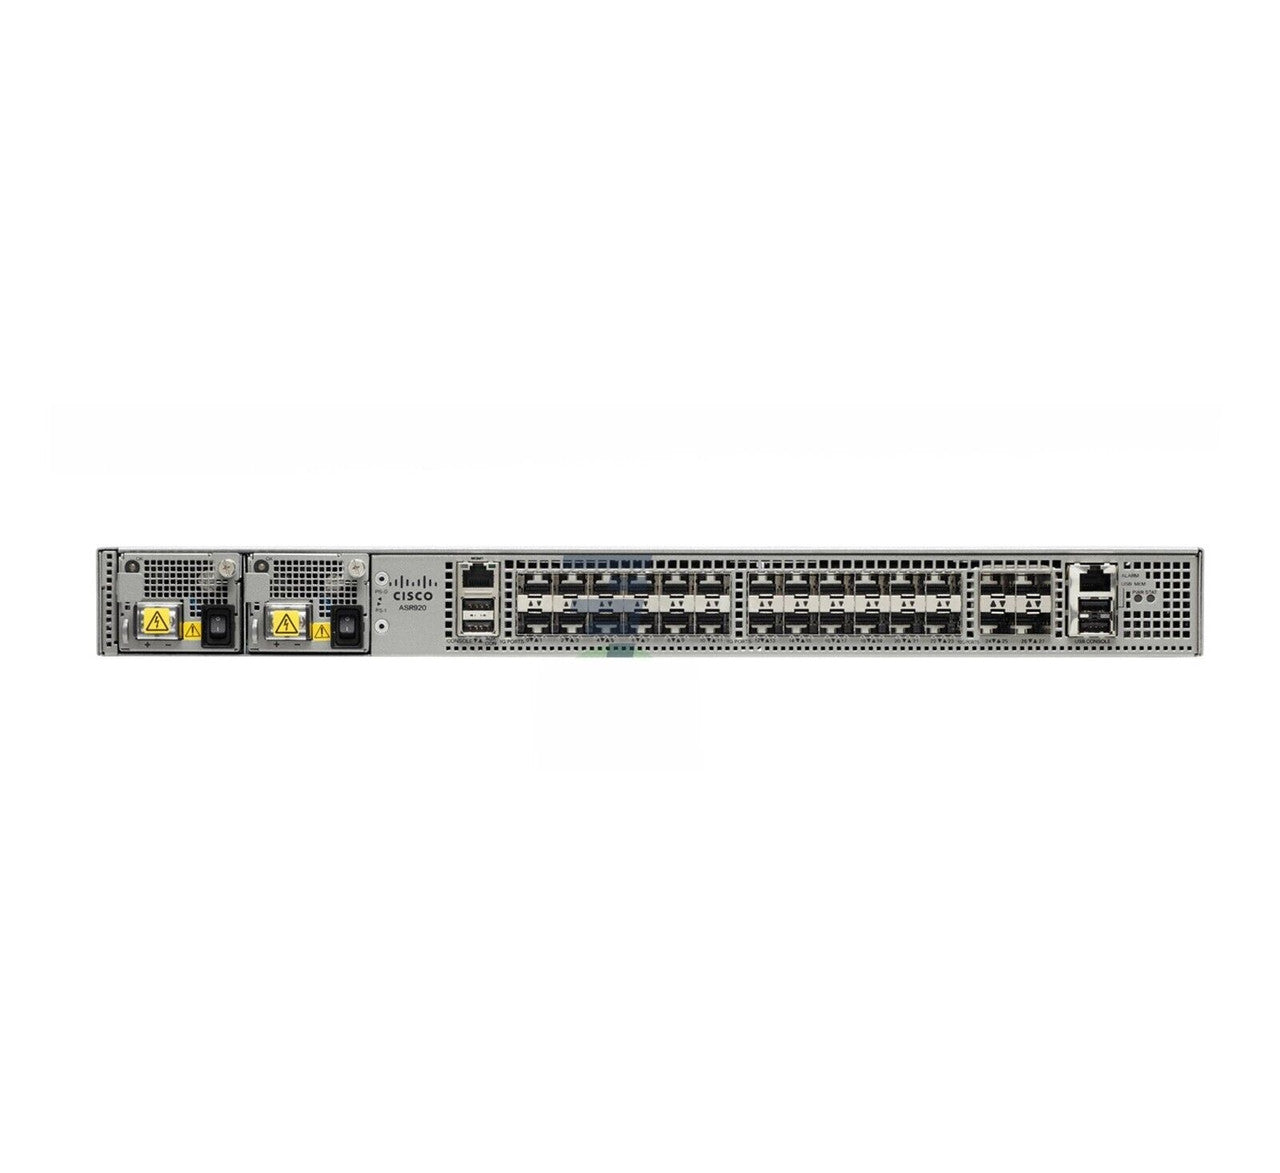 Cisco ASR-920-24SZ-M ASR 920 Series Router w/ Metro Access